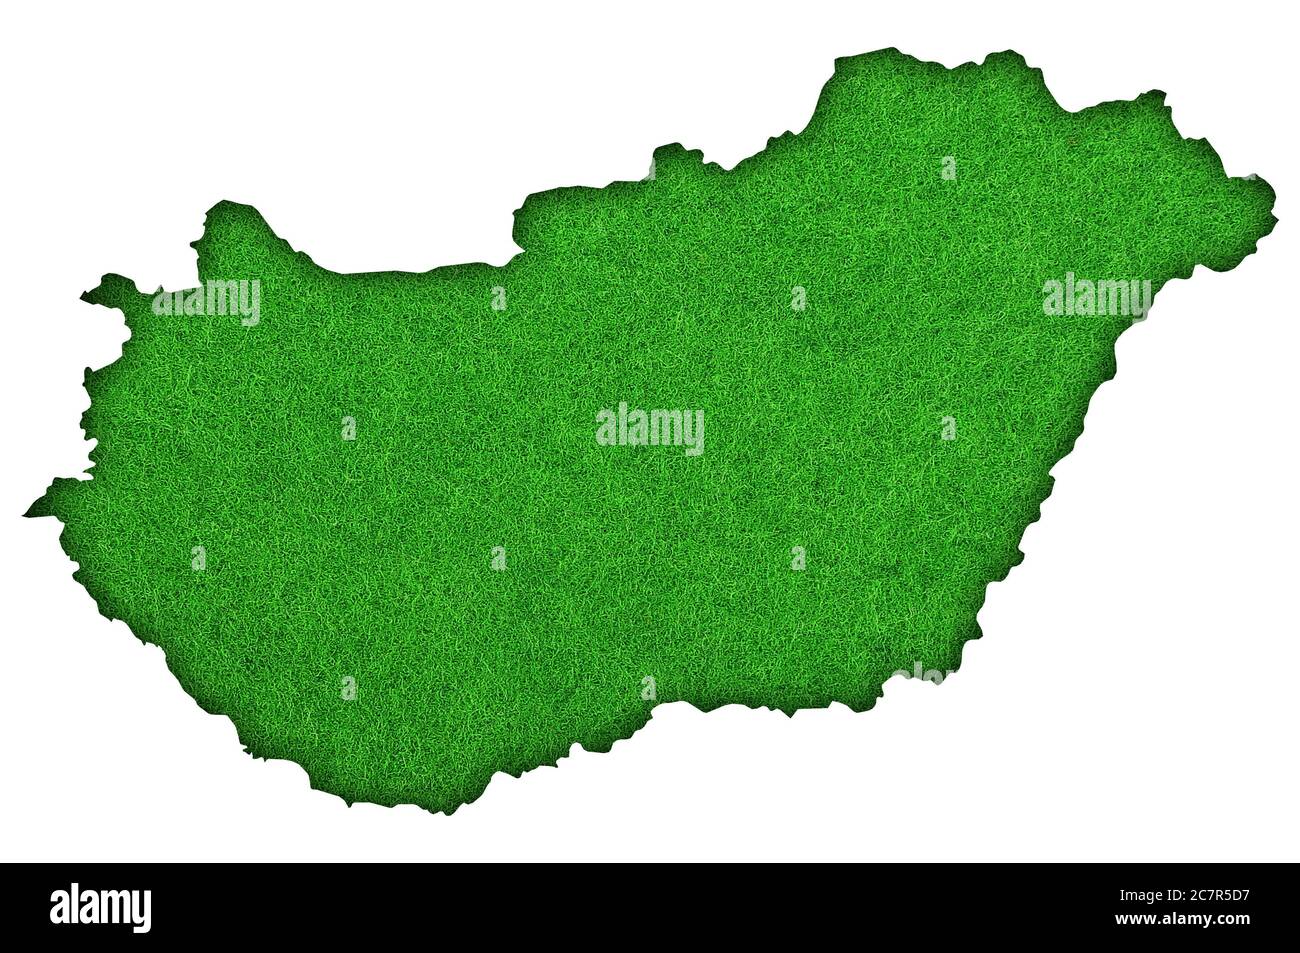 Map of Hungary on green felt Stock Photo